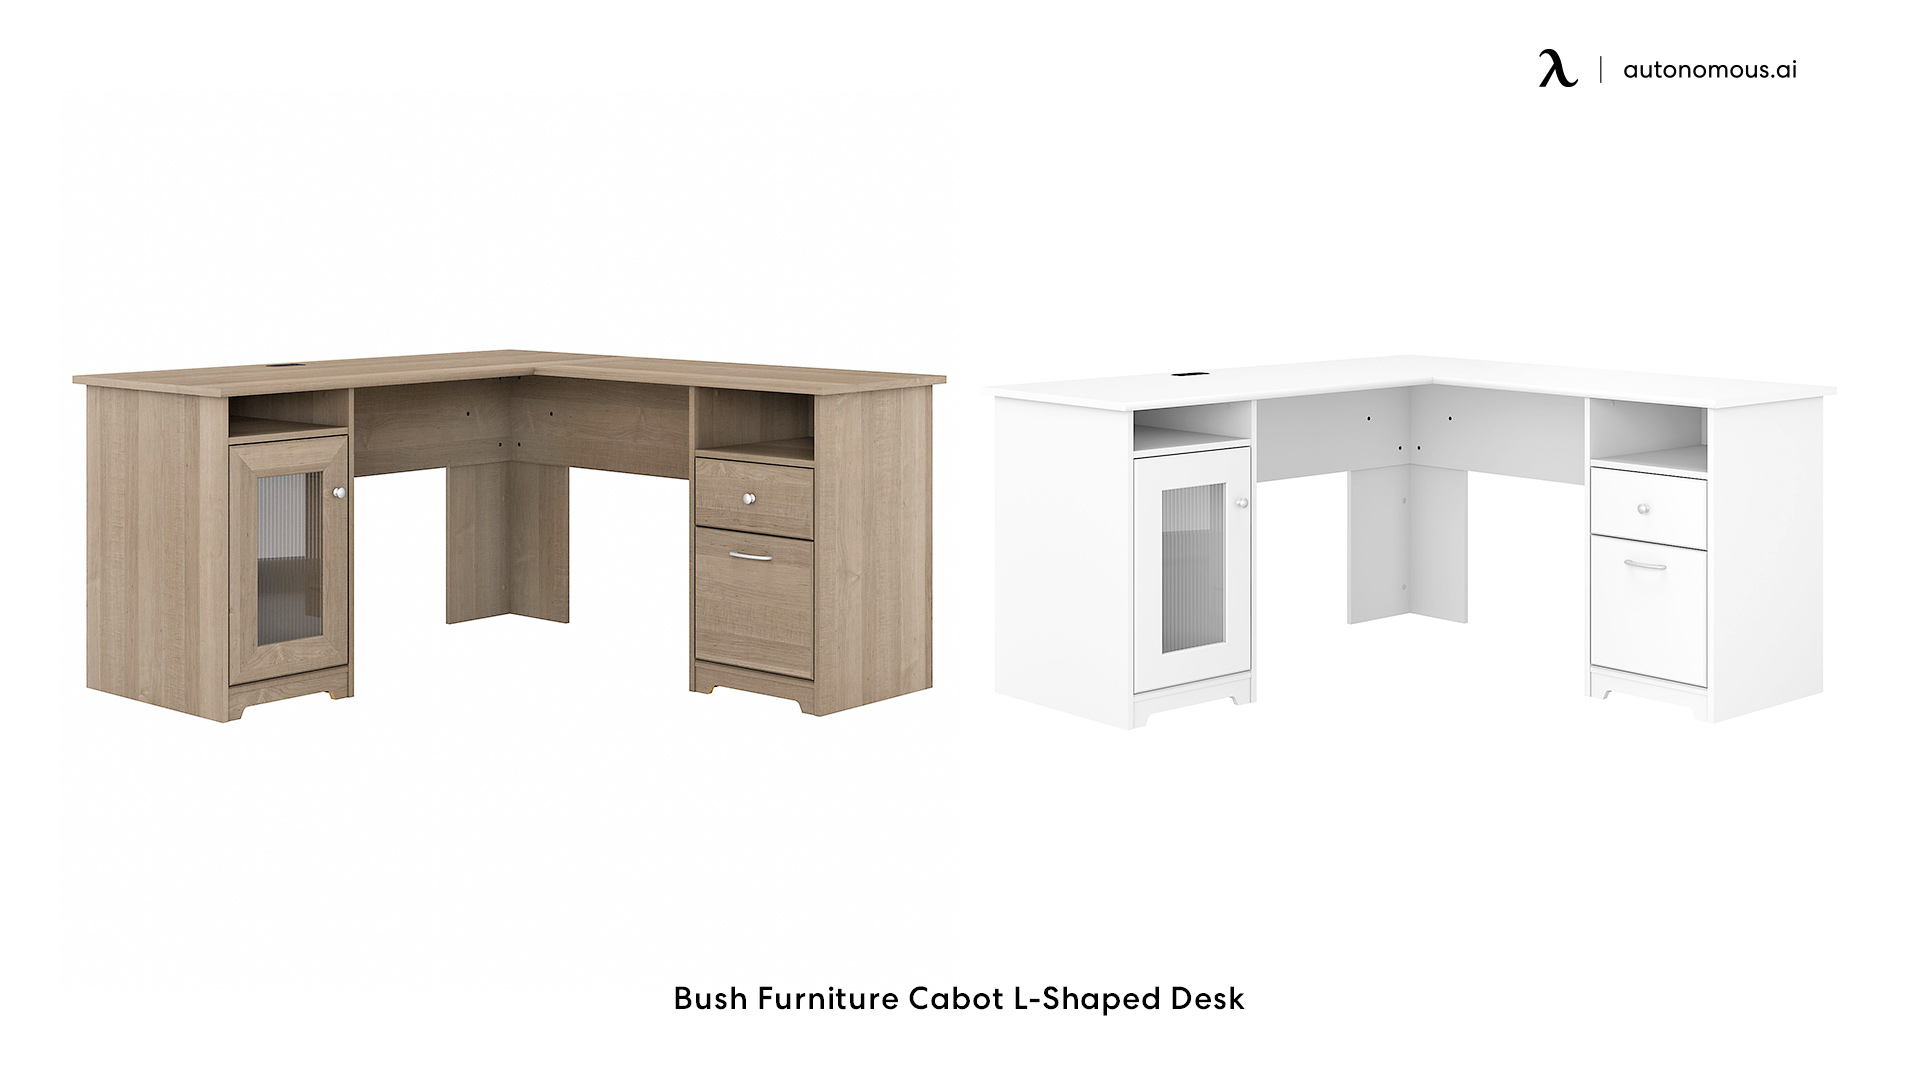 Cabot Desk by Bush Furniture